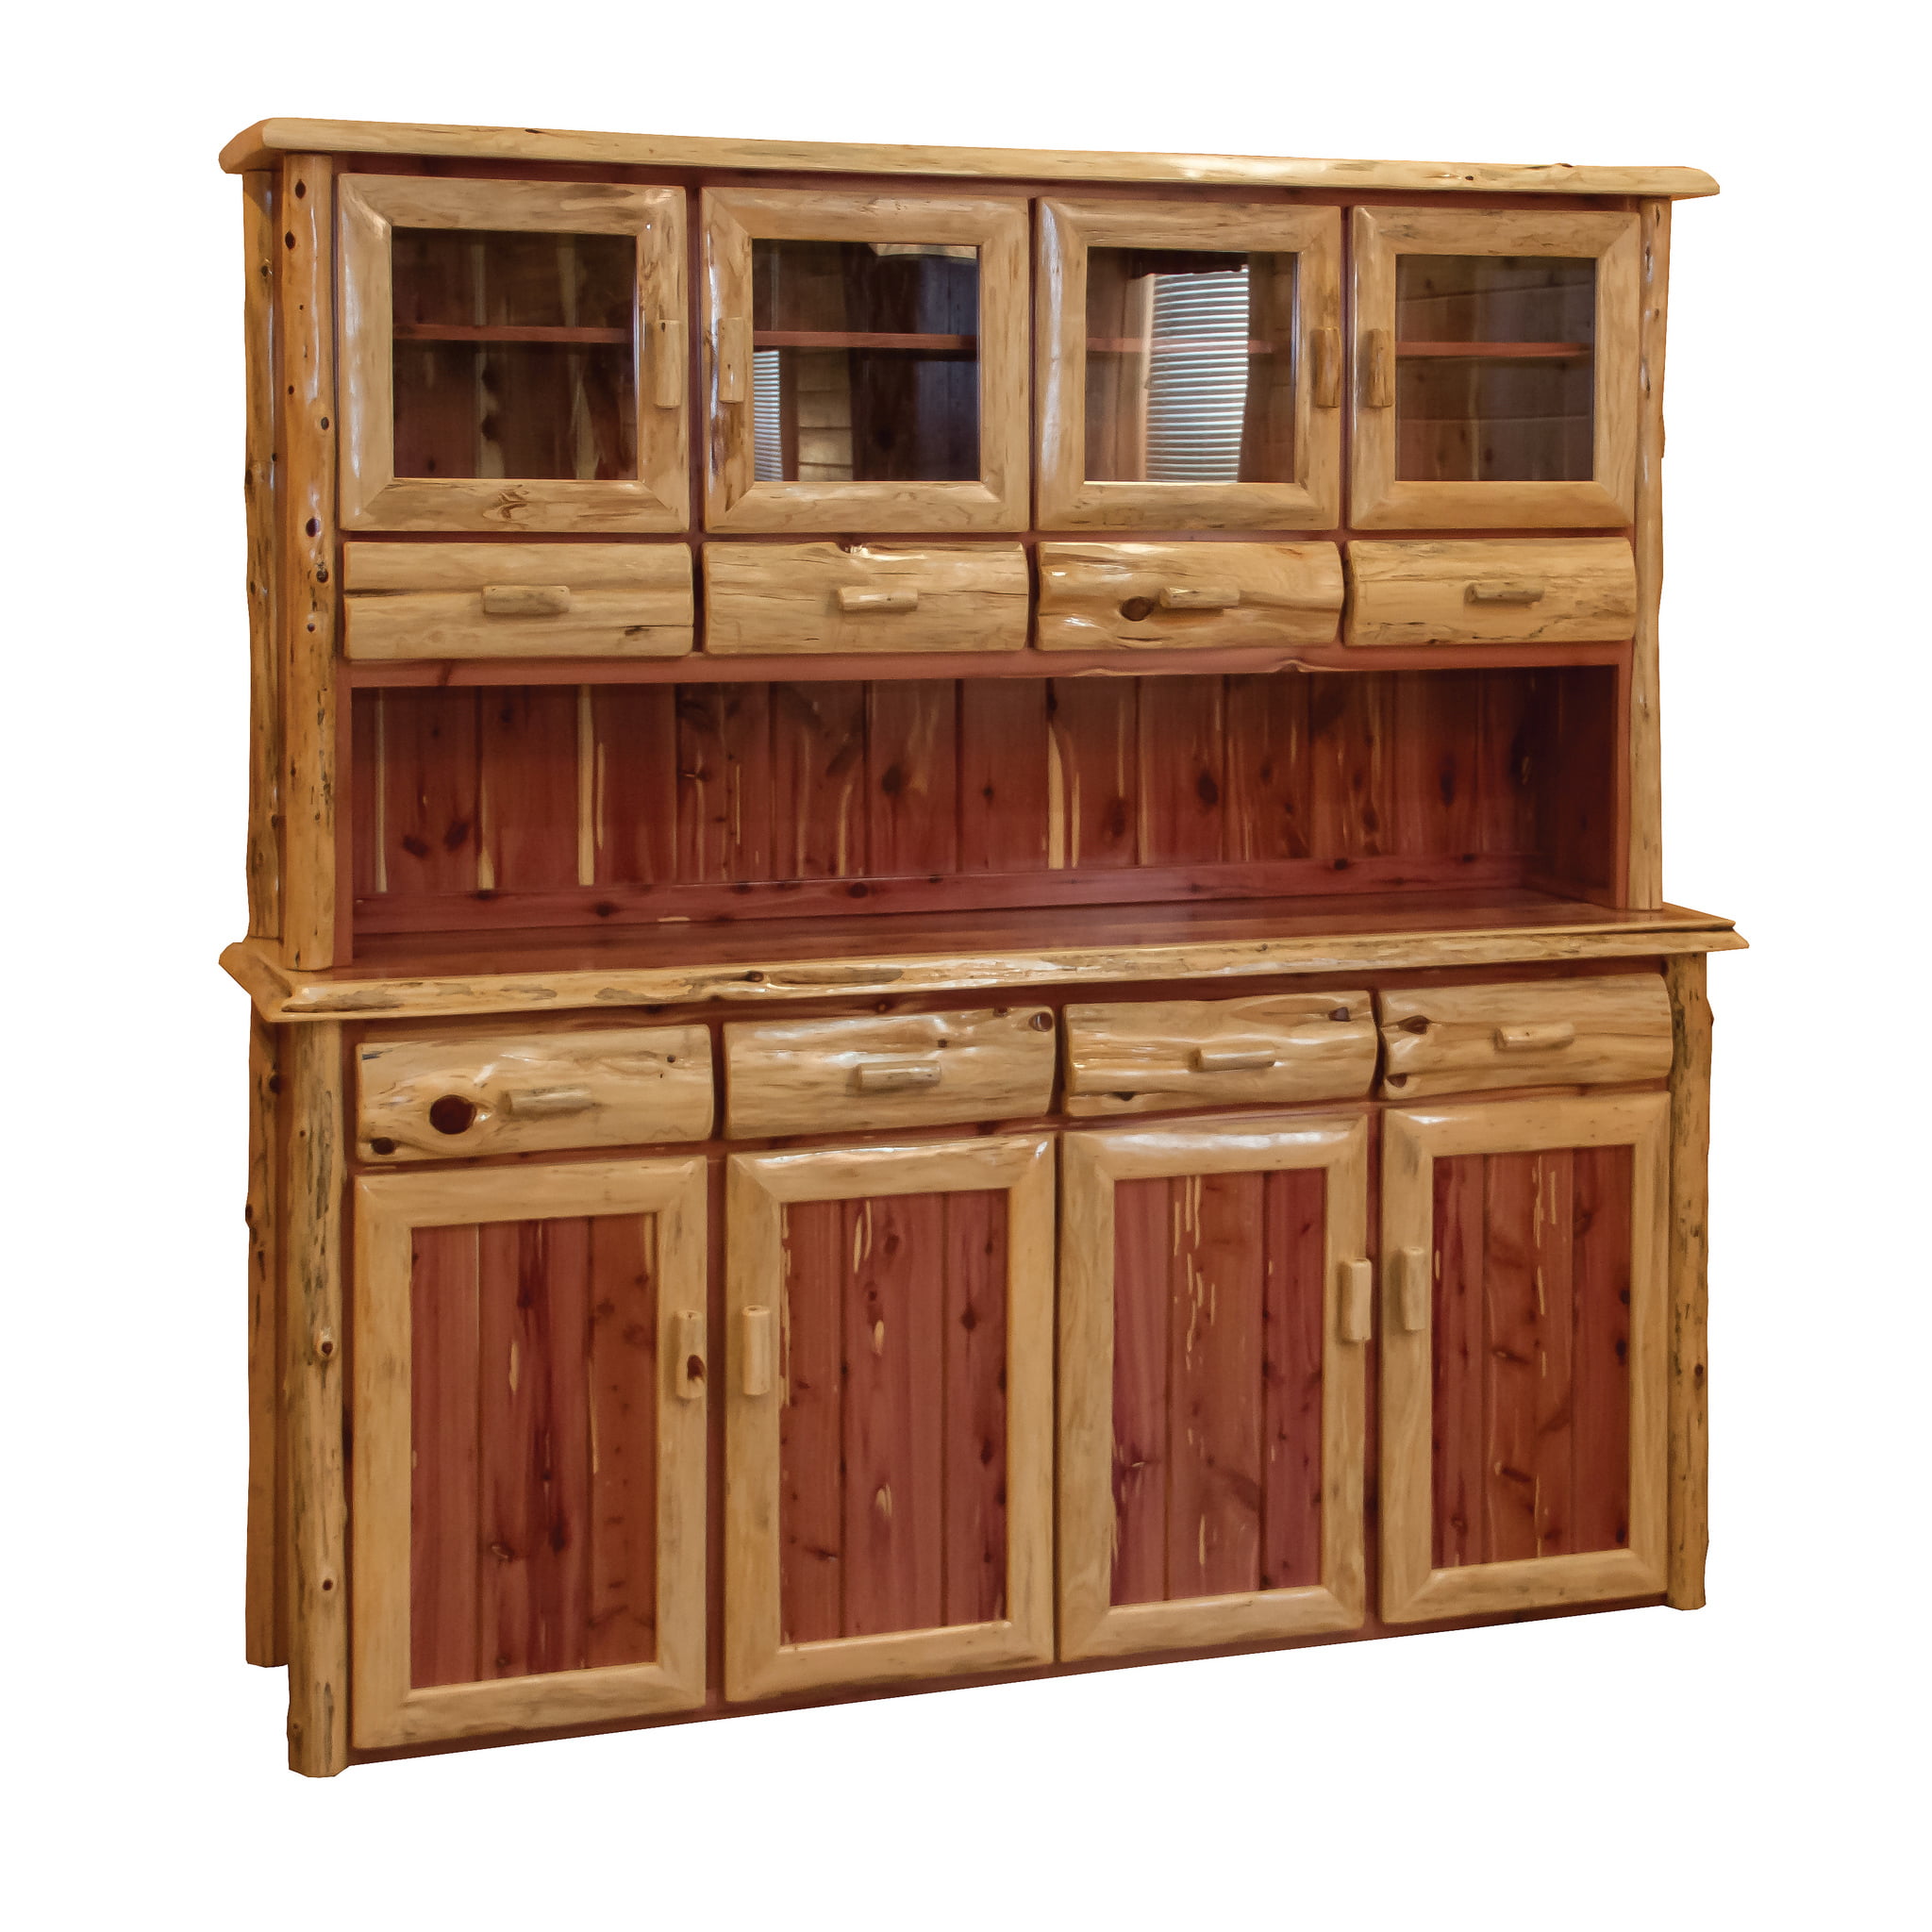 Furniture Barn USA™ Rustic Red Cedar Log 4 Door Hutch and Buffet 